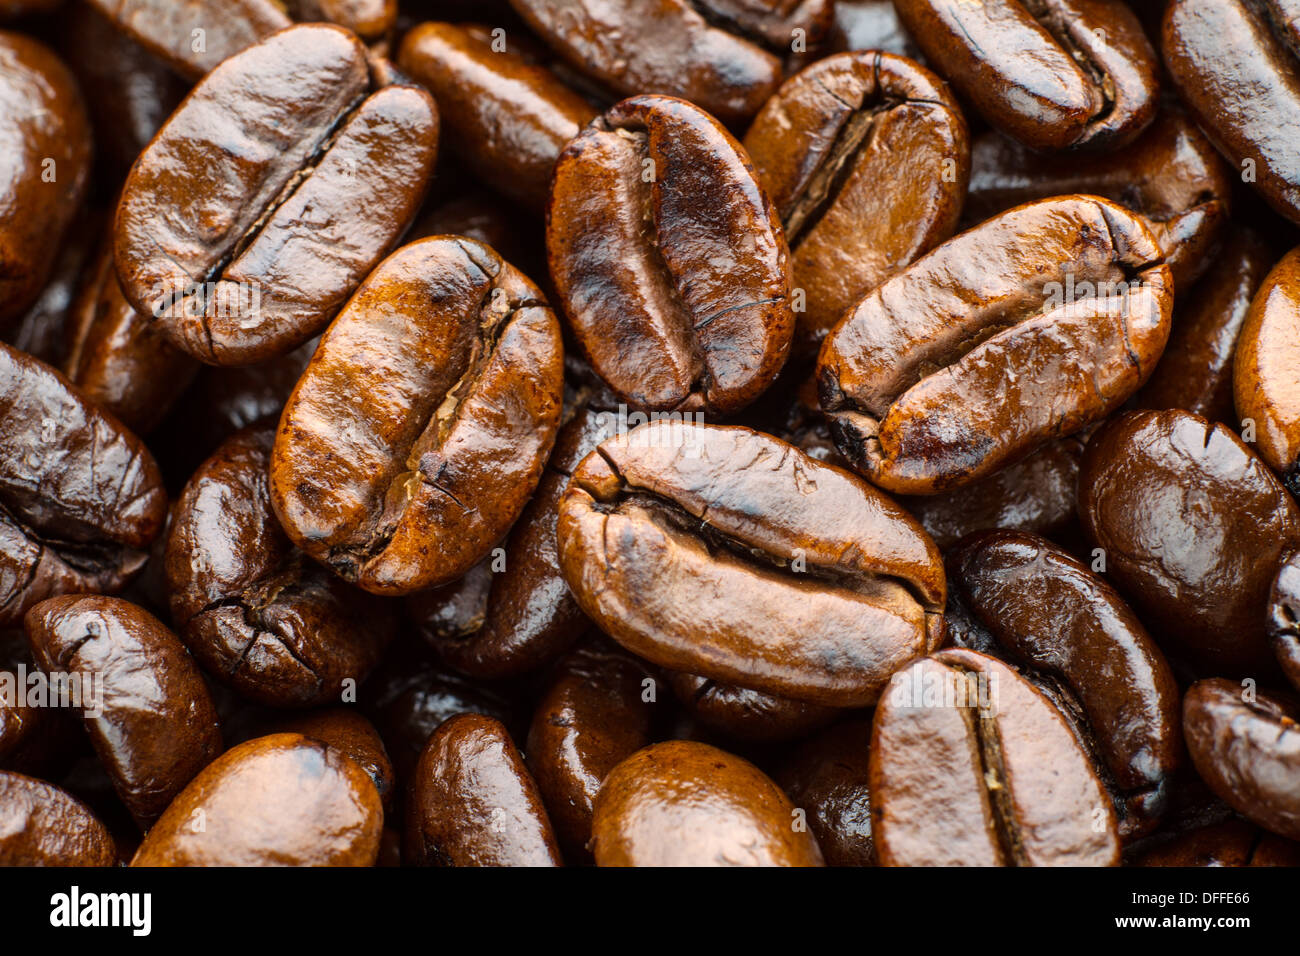 roasted coffee beans arabica Stock Photo